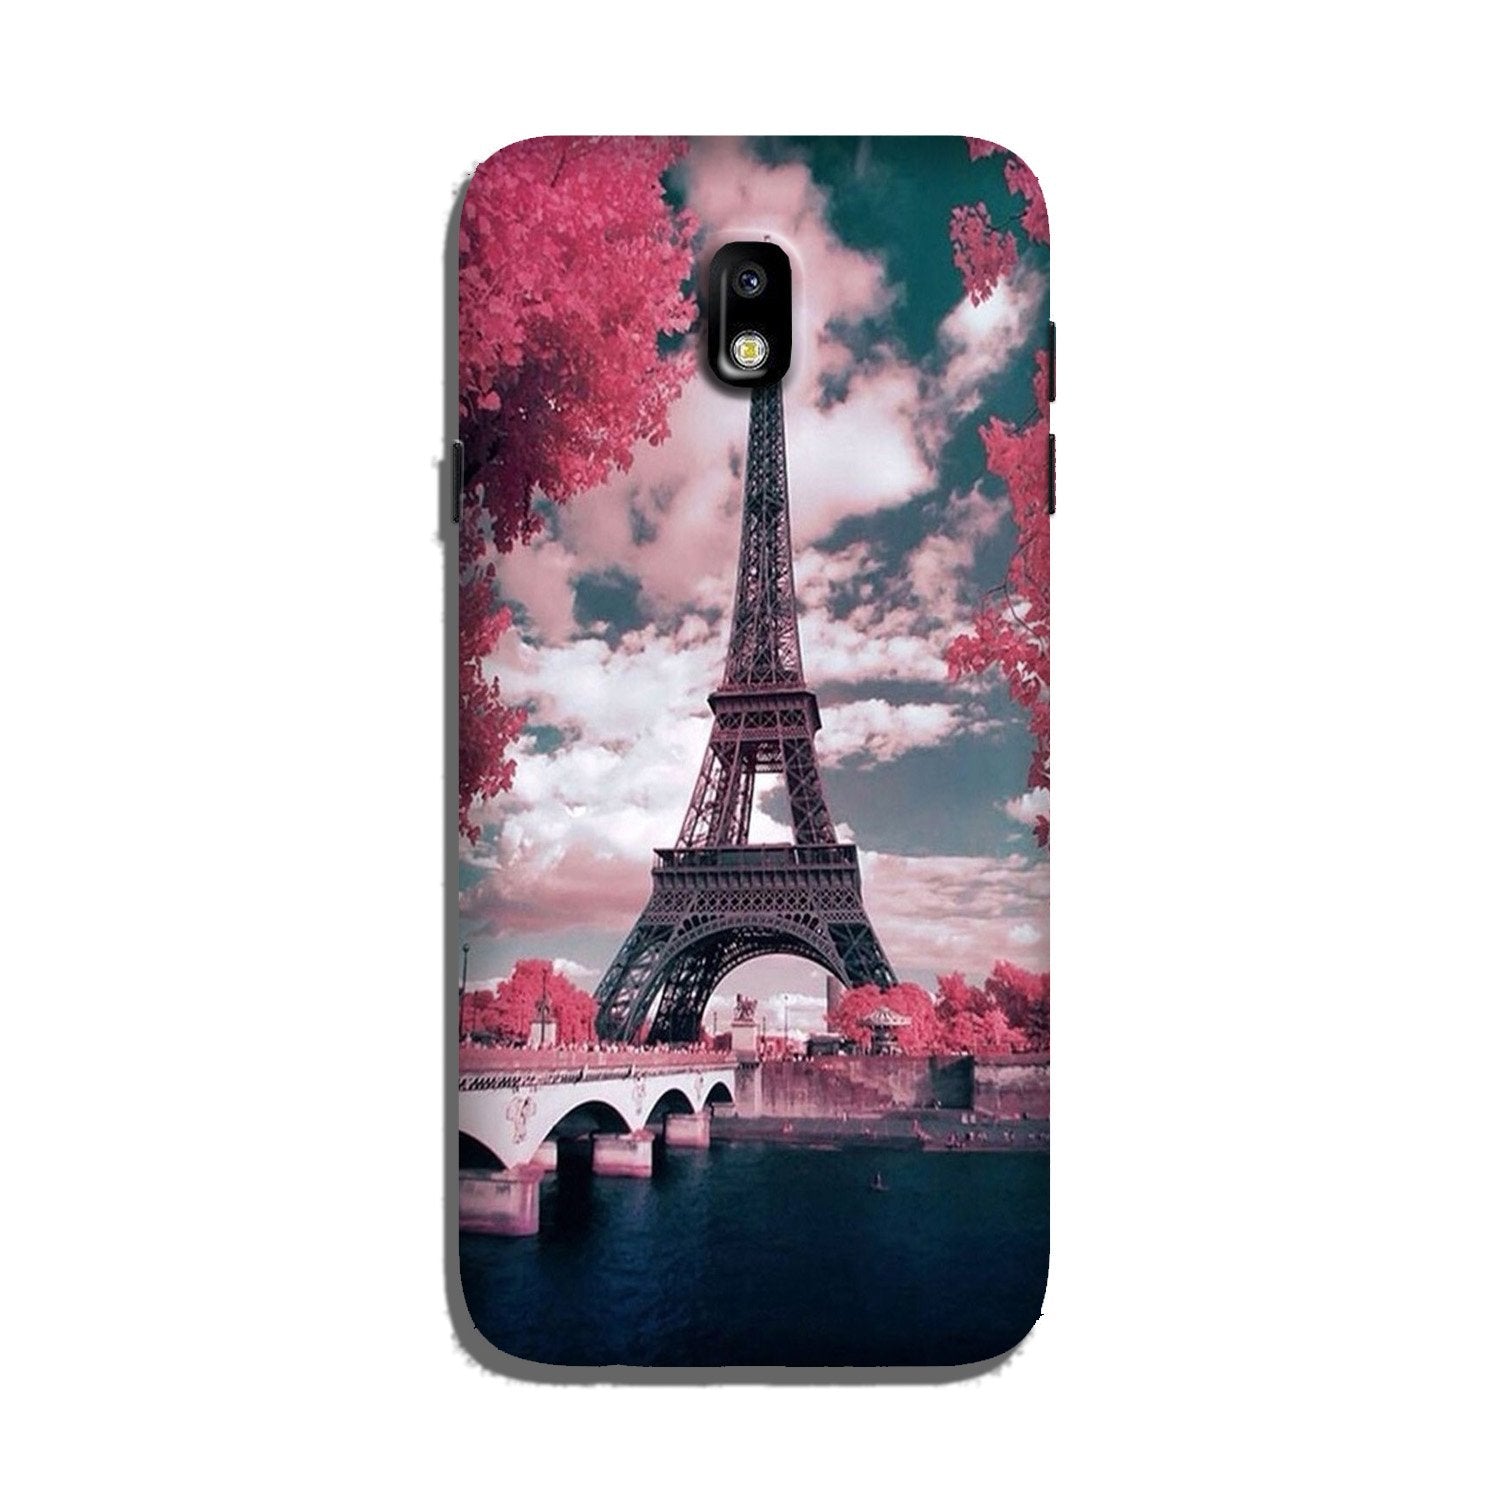 Eiffel Tower Case for Galaxy J7 Pro(Design - 101)